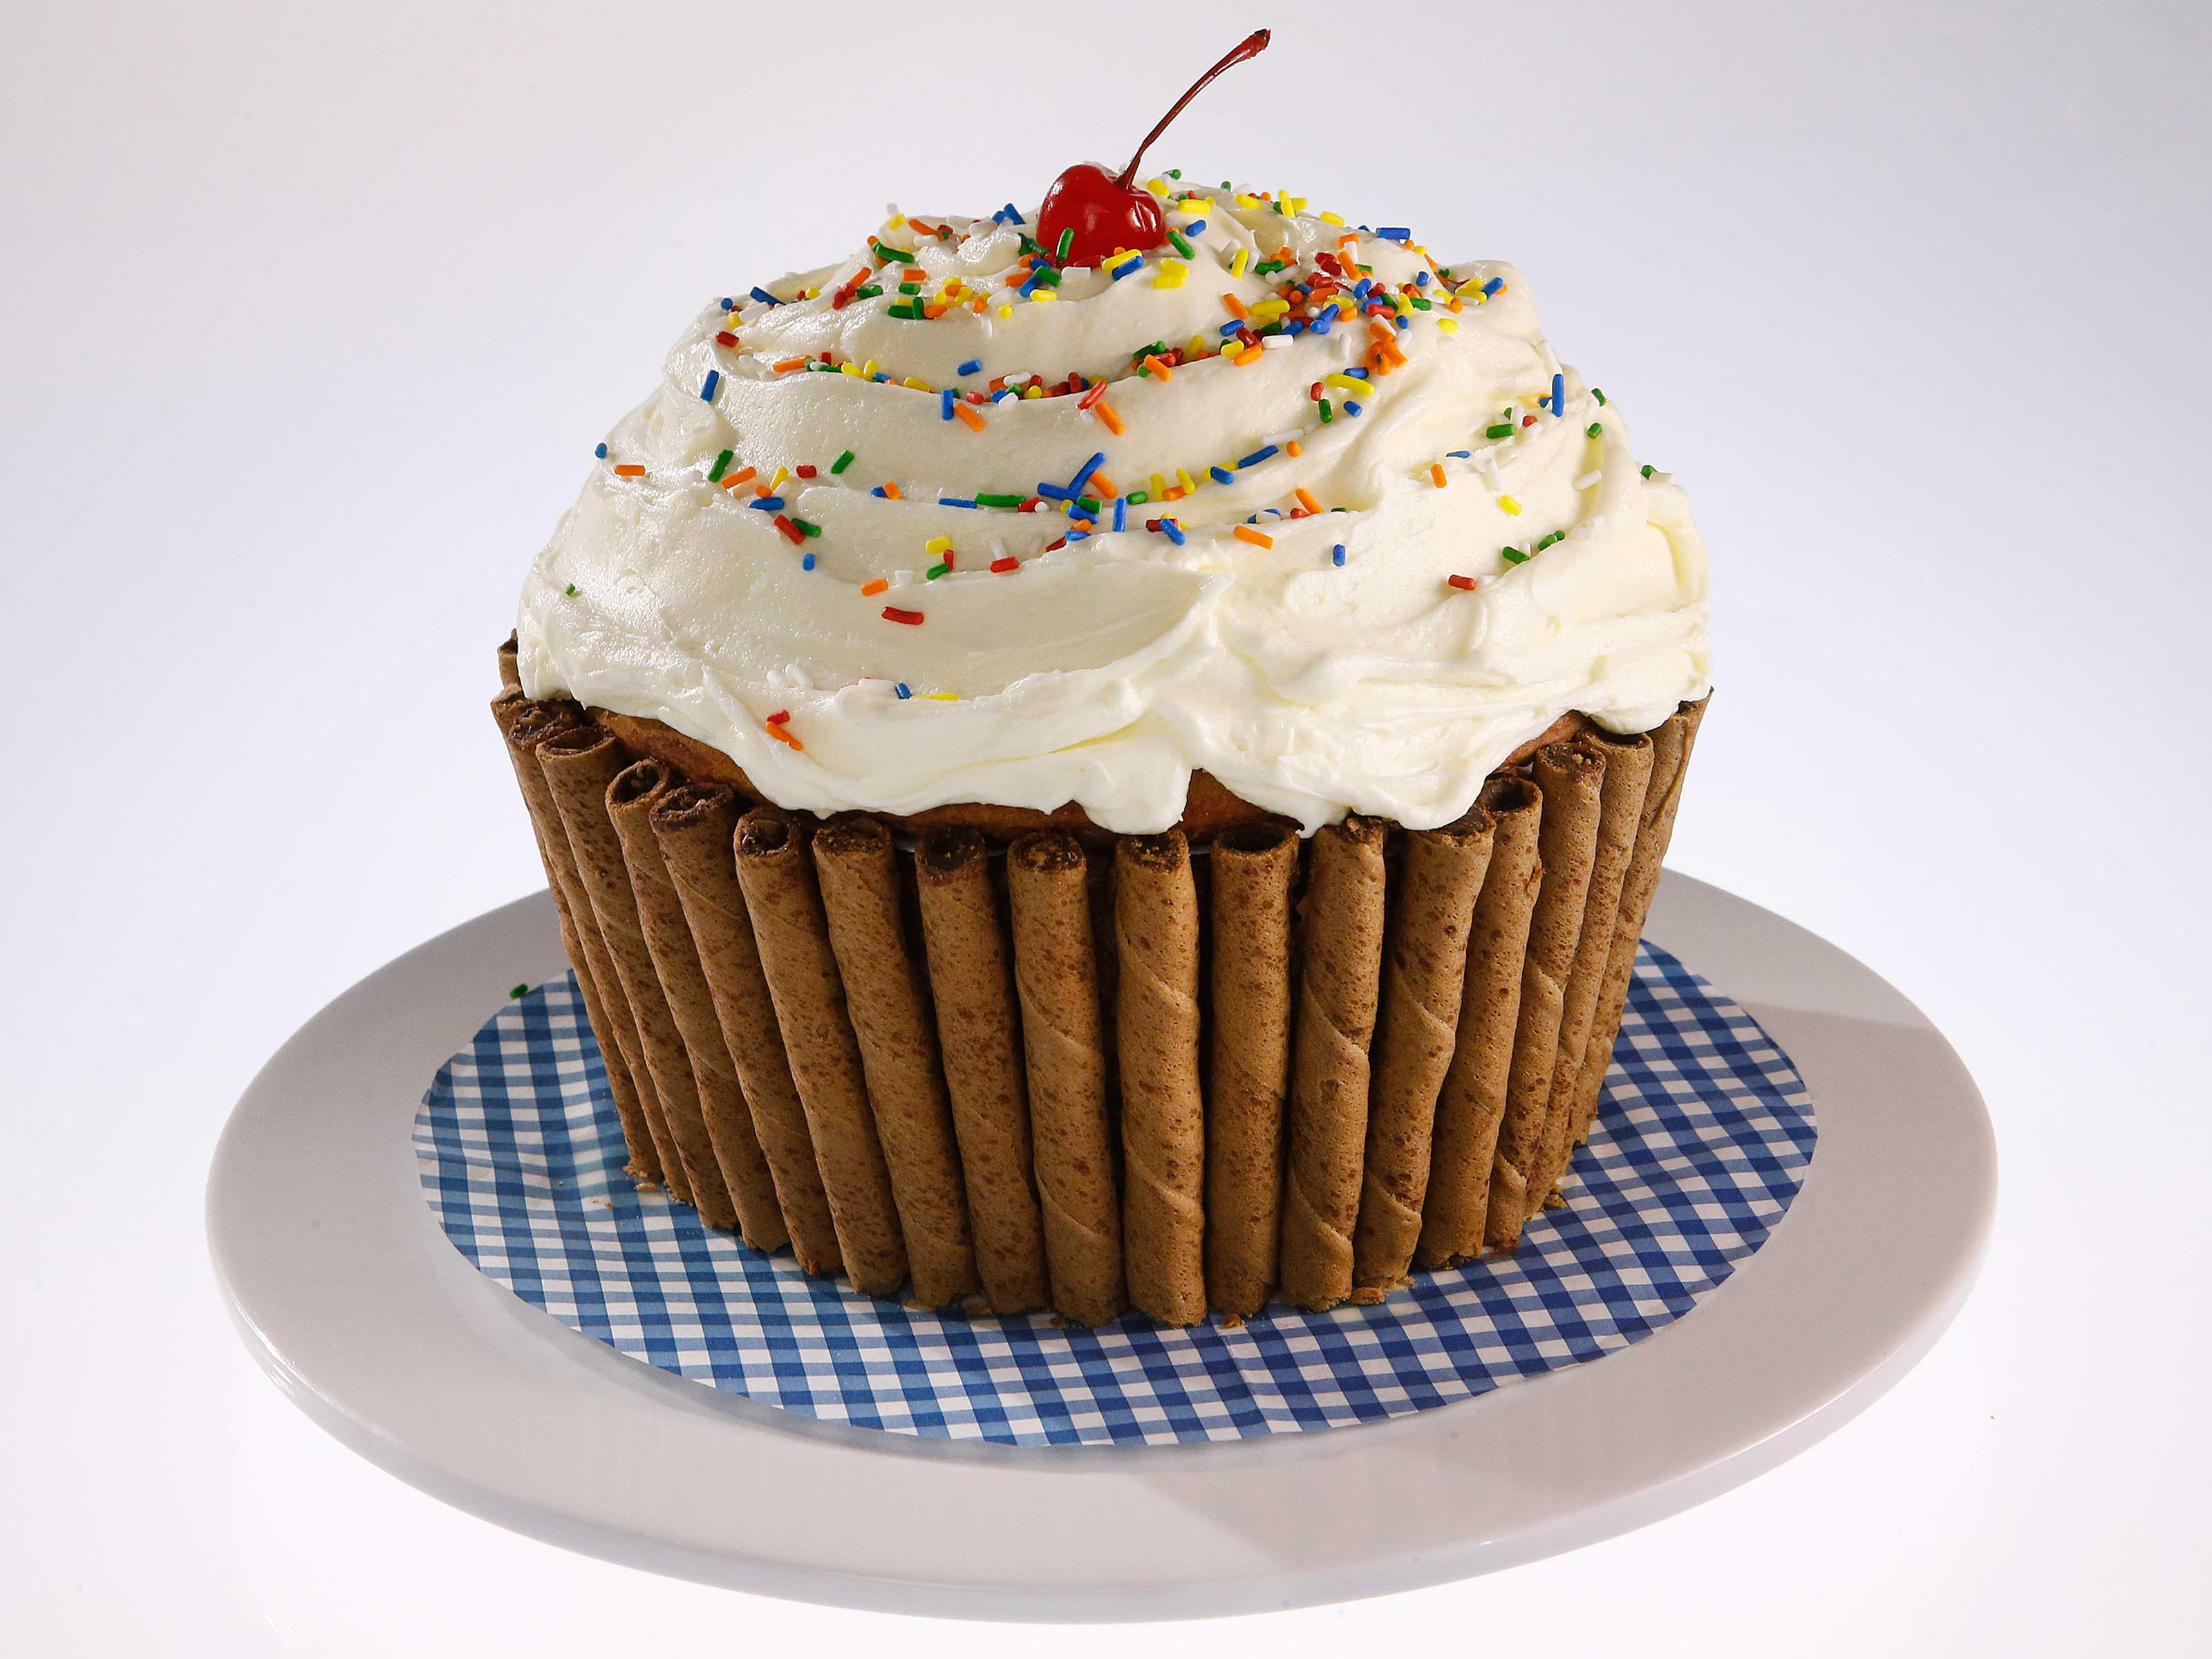 https://www.foodnetwork.com/content/dam/images/food/fullset/2016/5/5/0/SI0101_Big-Cupcake-Cake_s4x3.jpg